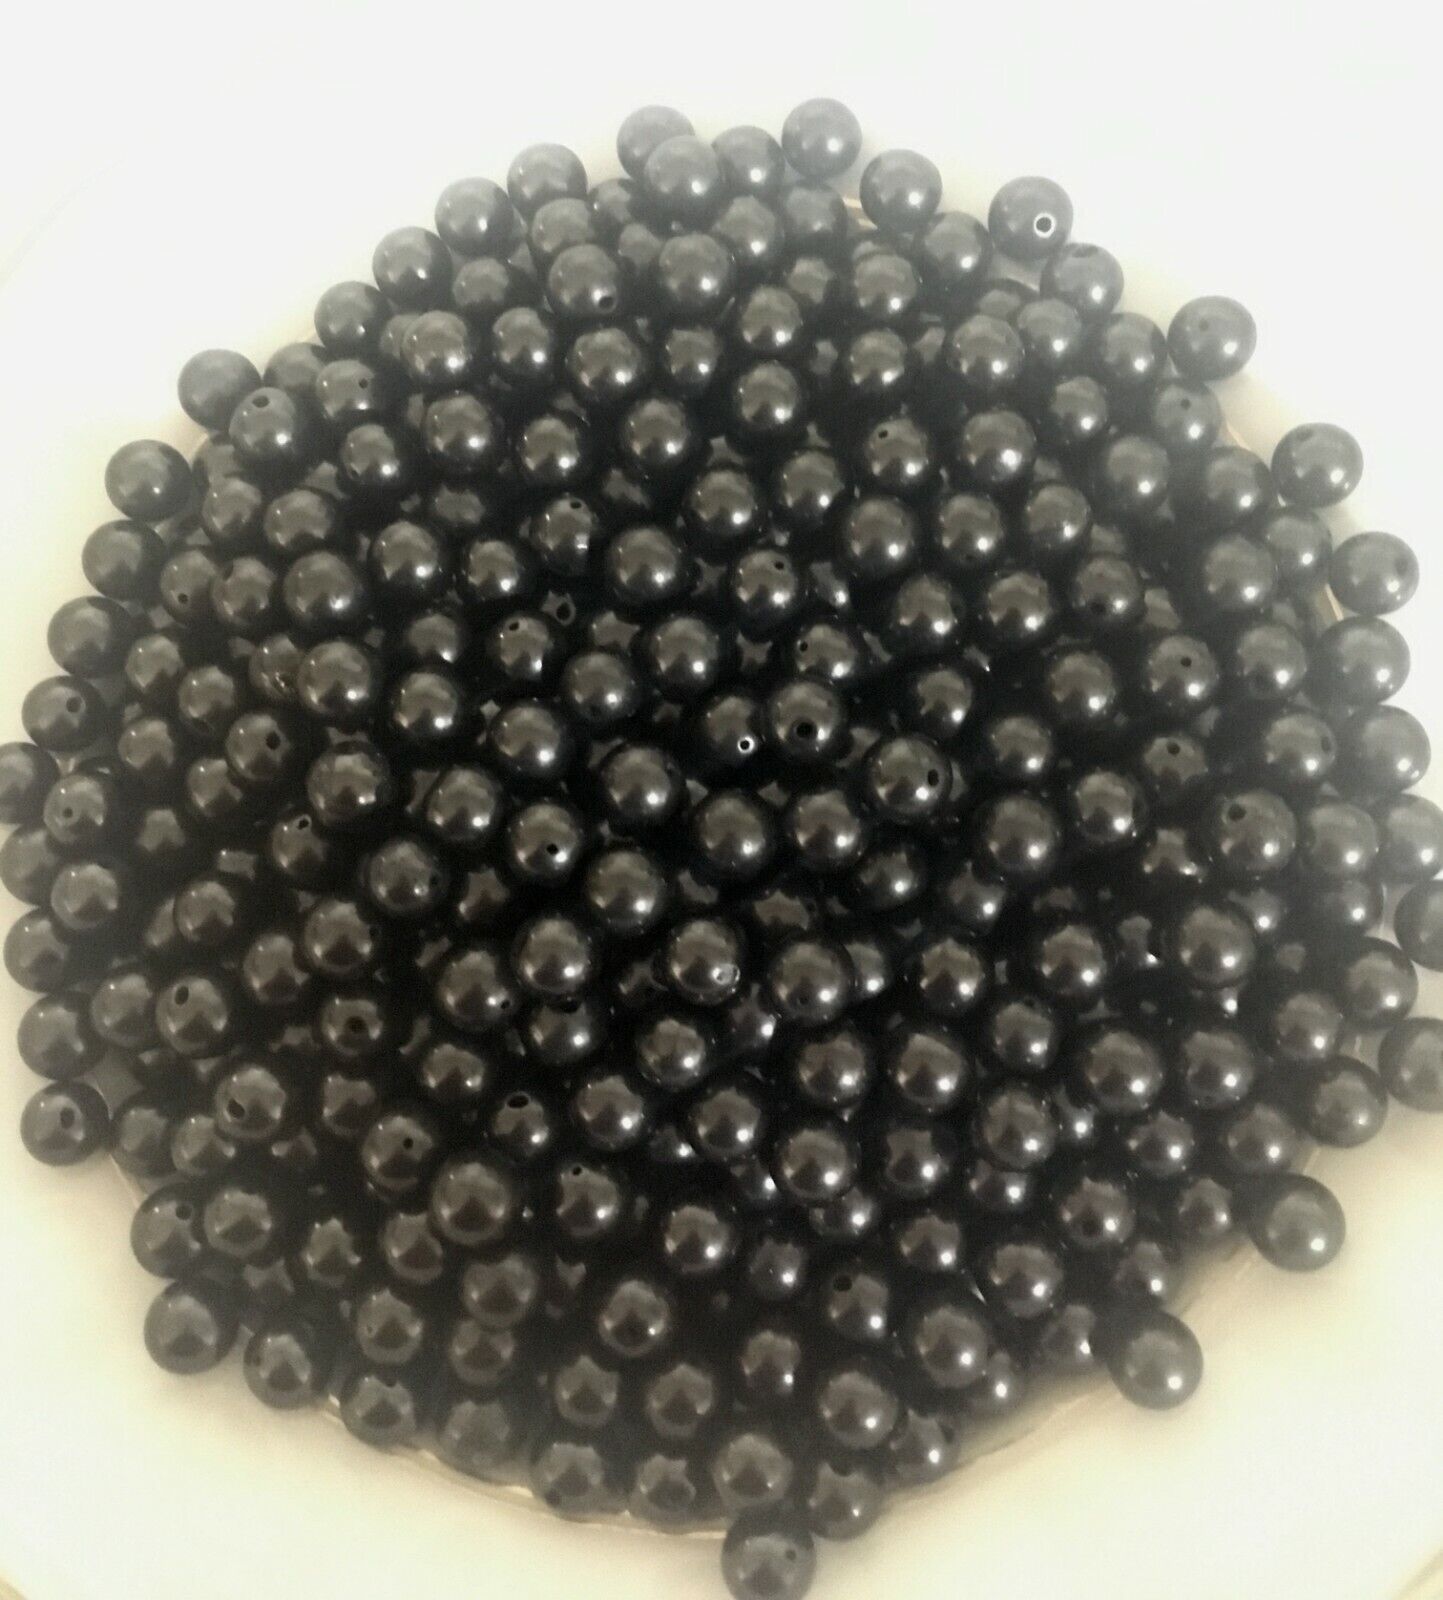 500 pcs SHUNGITE Stone 8 mm Polished Round Beads From Russia - Bulk Loose Beads